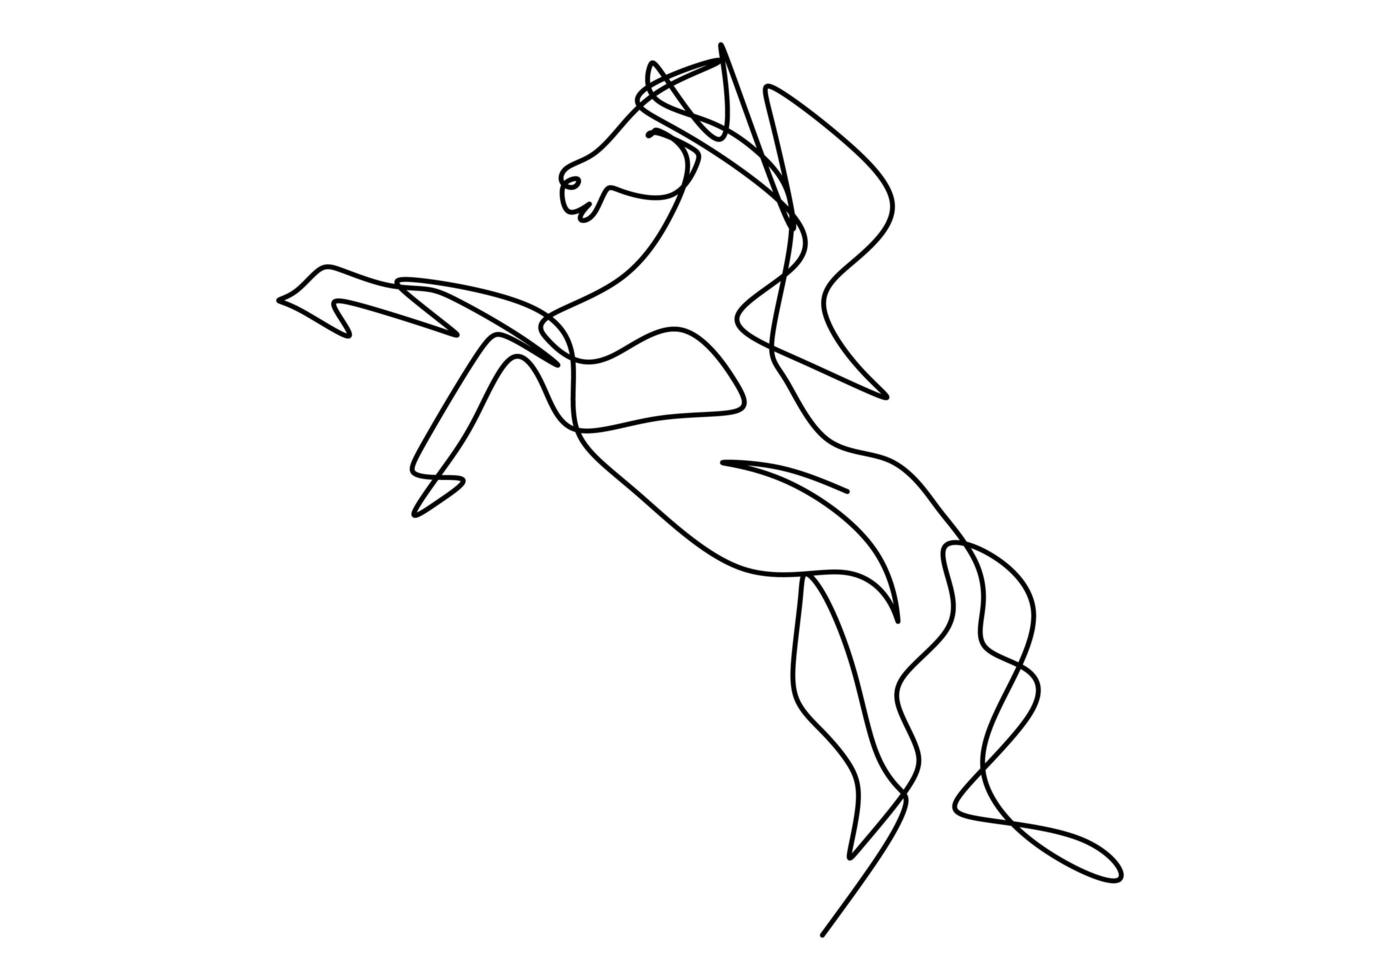 Un dibujo de línea continua de un muñeco de caballo de madera clásico antiguo retro. arte lineal. garabatear. vector